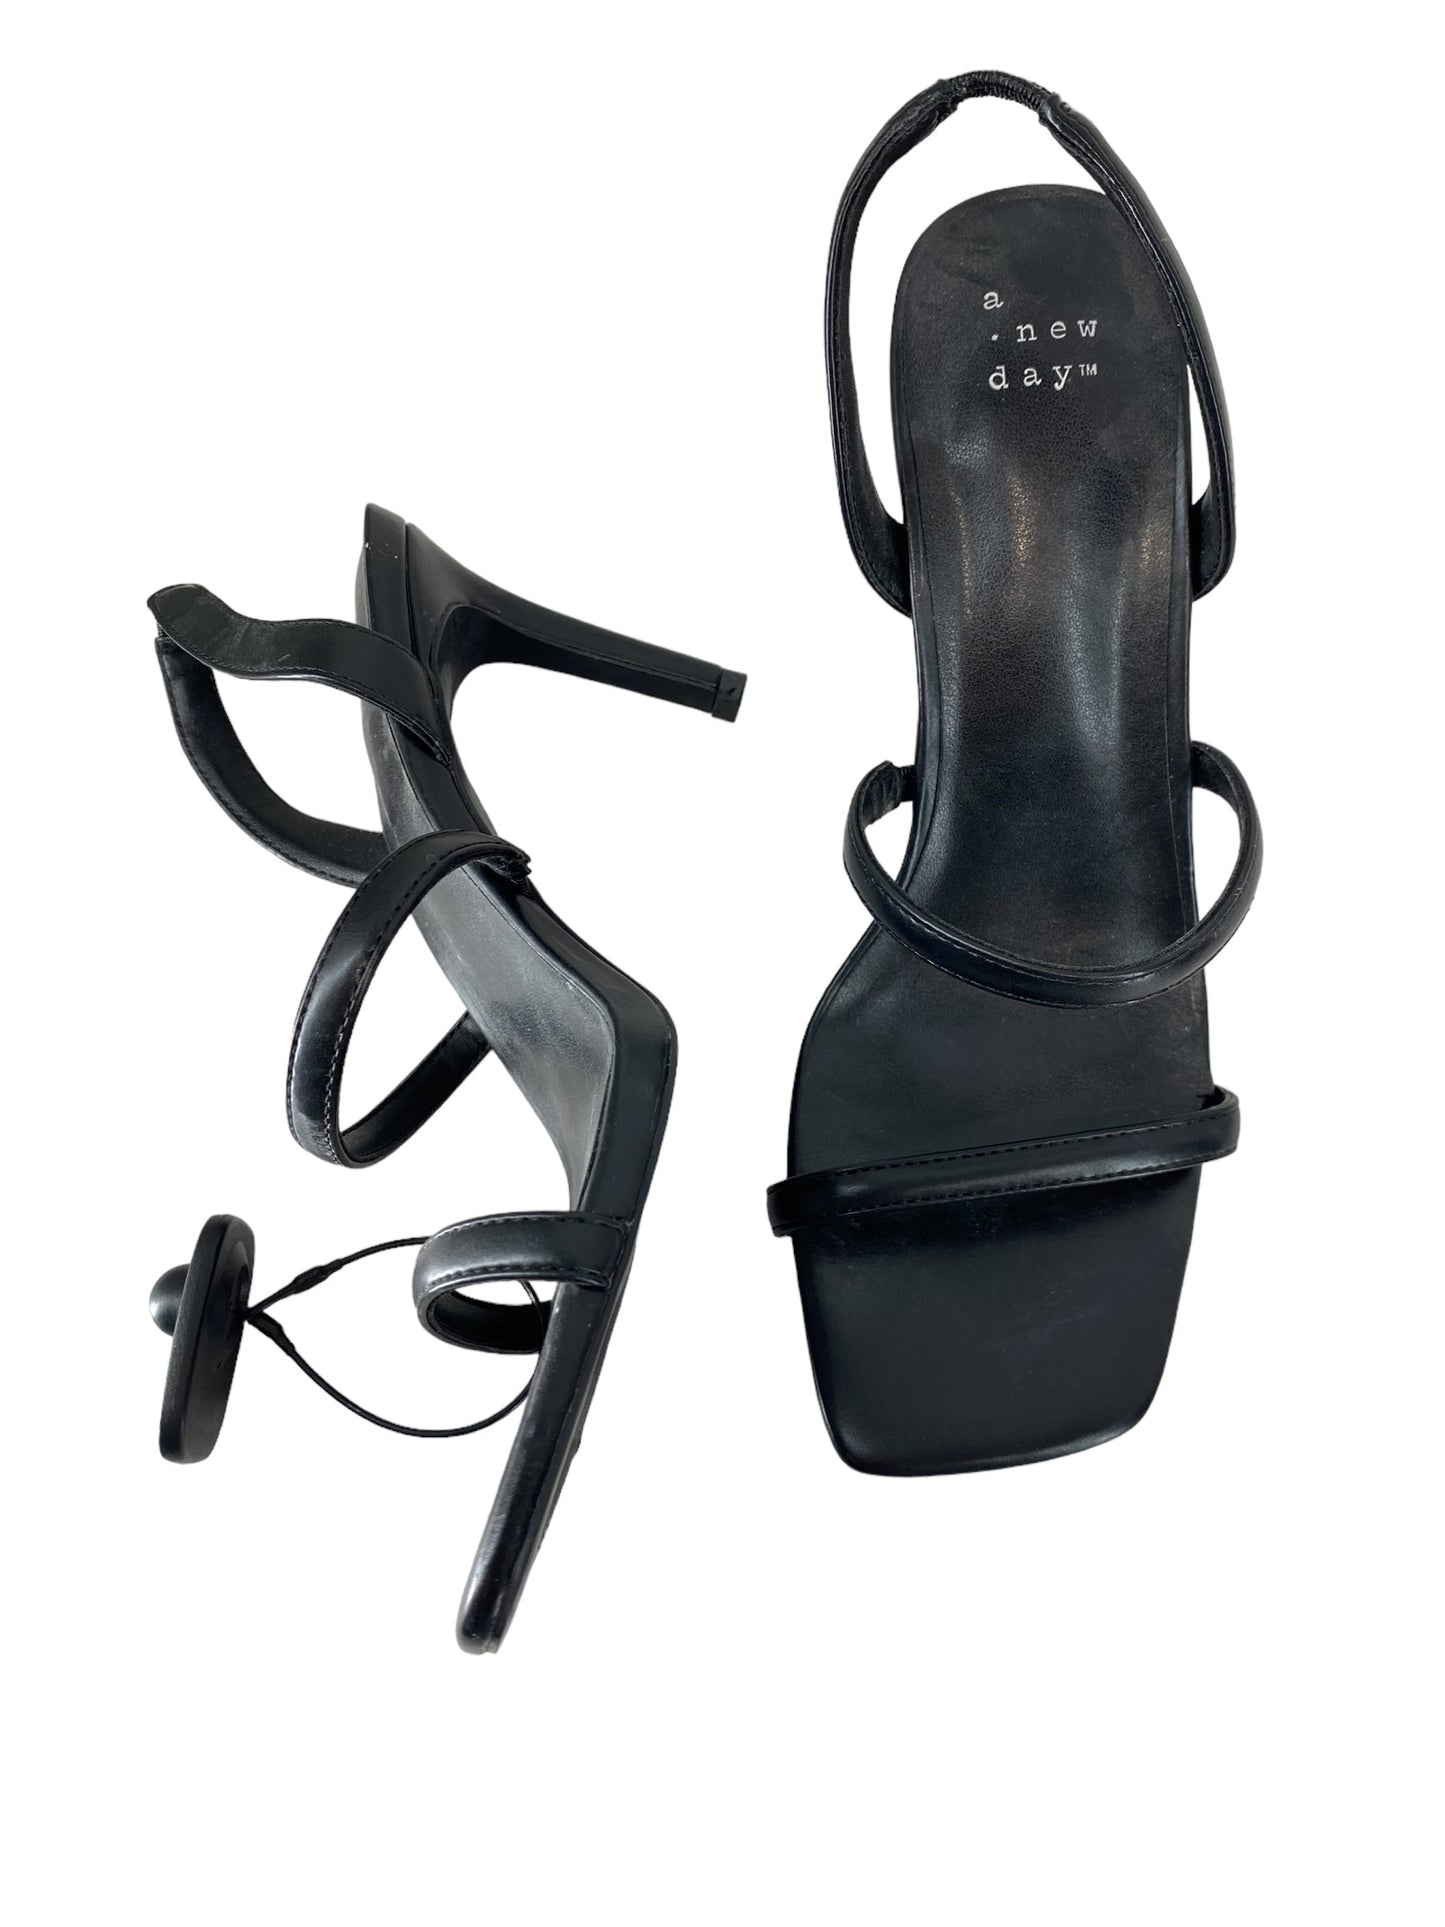 Black Sandals Heels Stiletto A New Day, Size 8.5